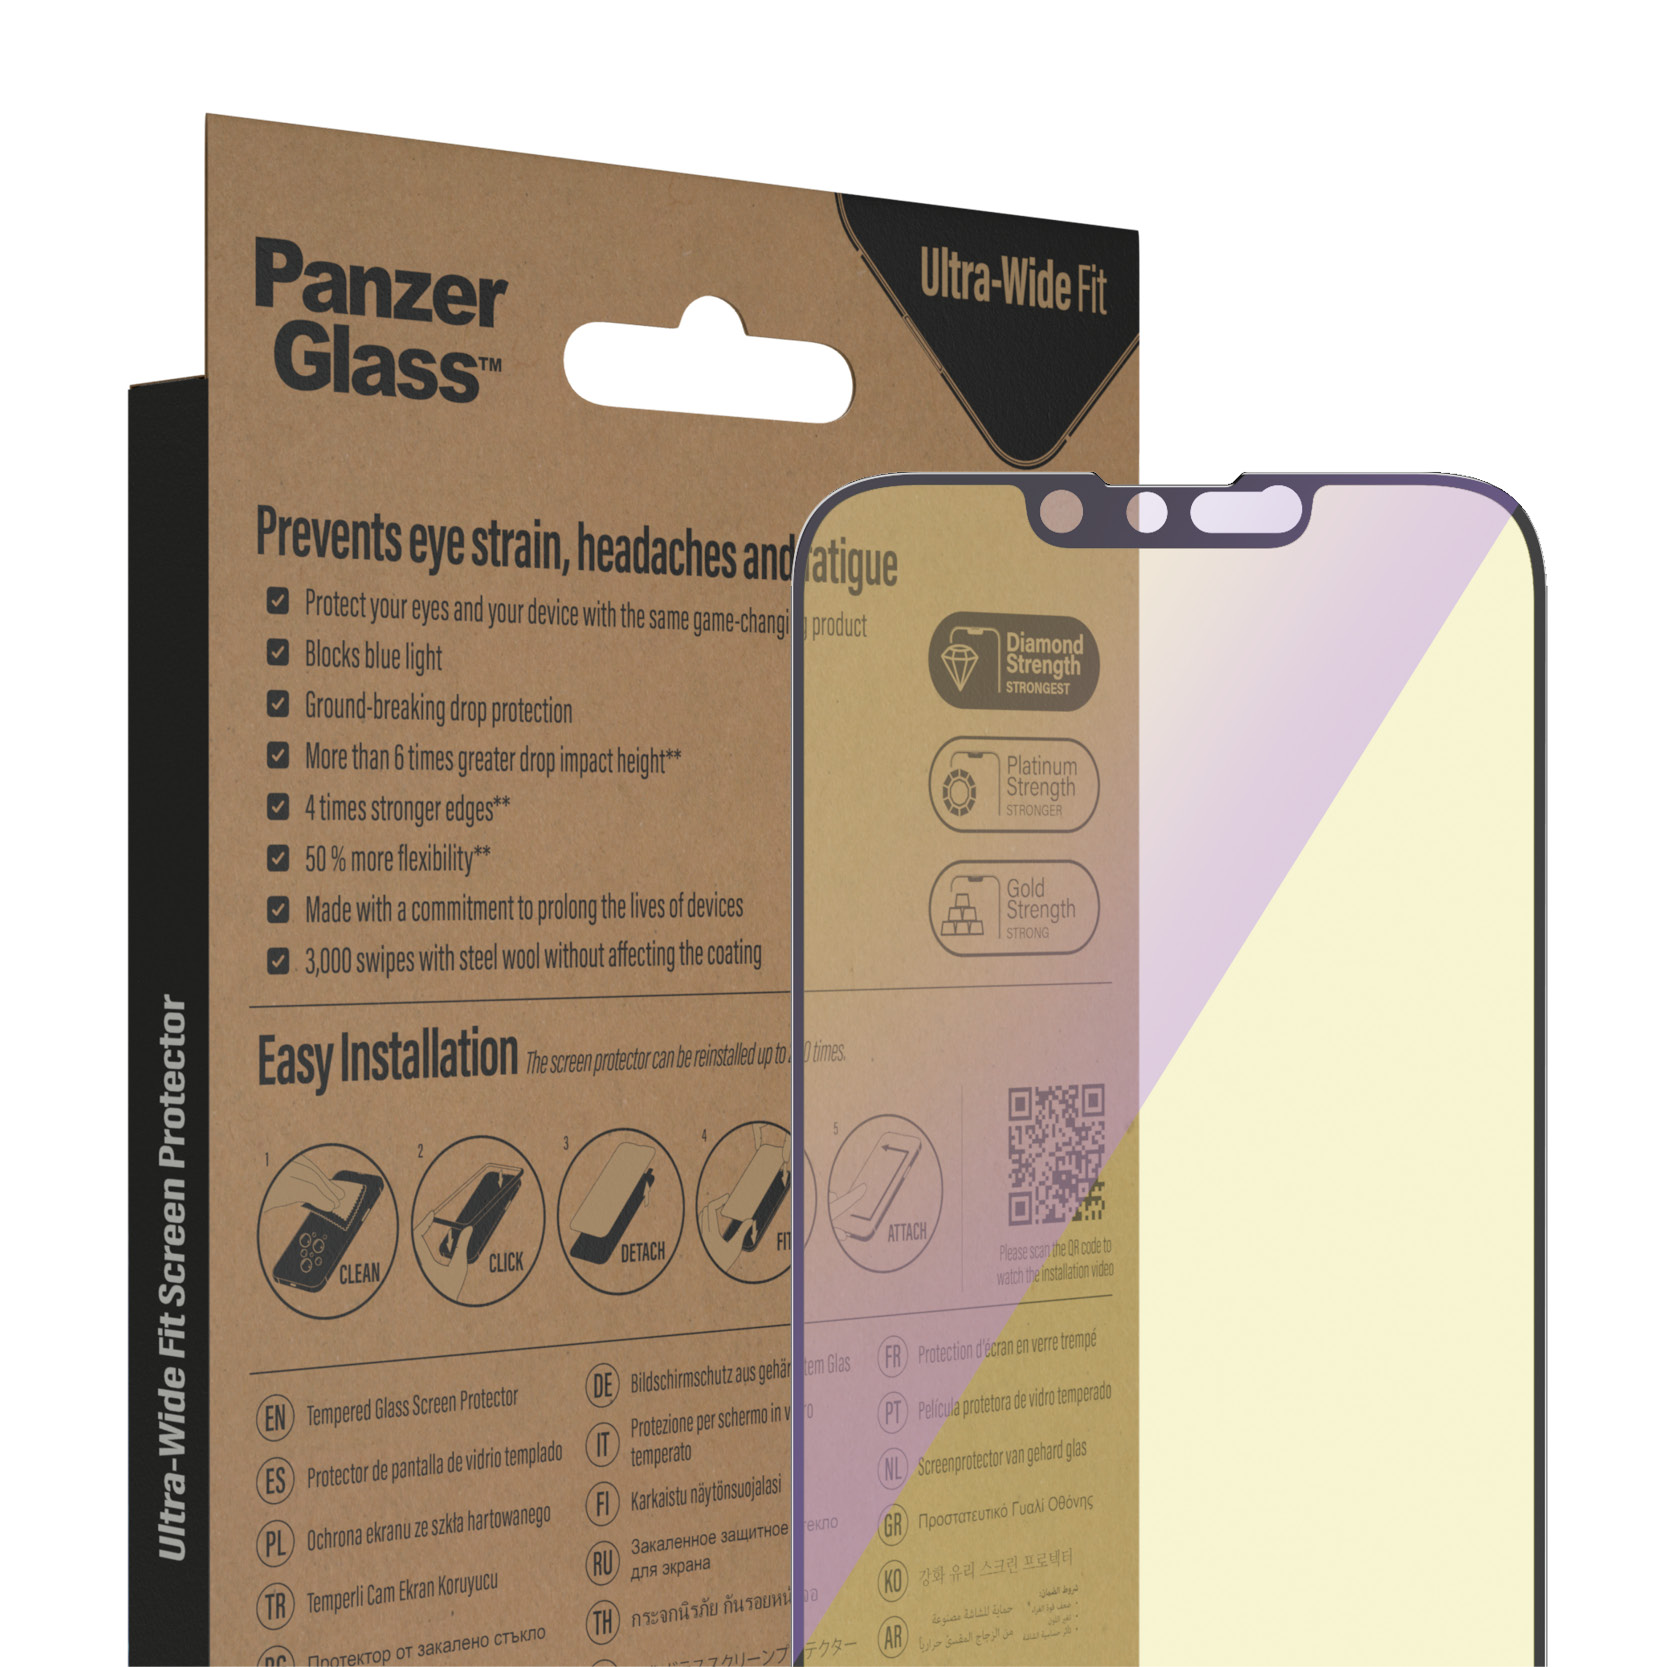 Protector de ecran PanzerGlass anti-lumina albastra Apple iPhone 14 | 13 | 13 Pro | Potrivire ultra-larga cu. EasyAligner thumb